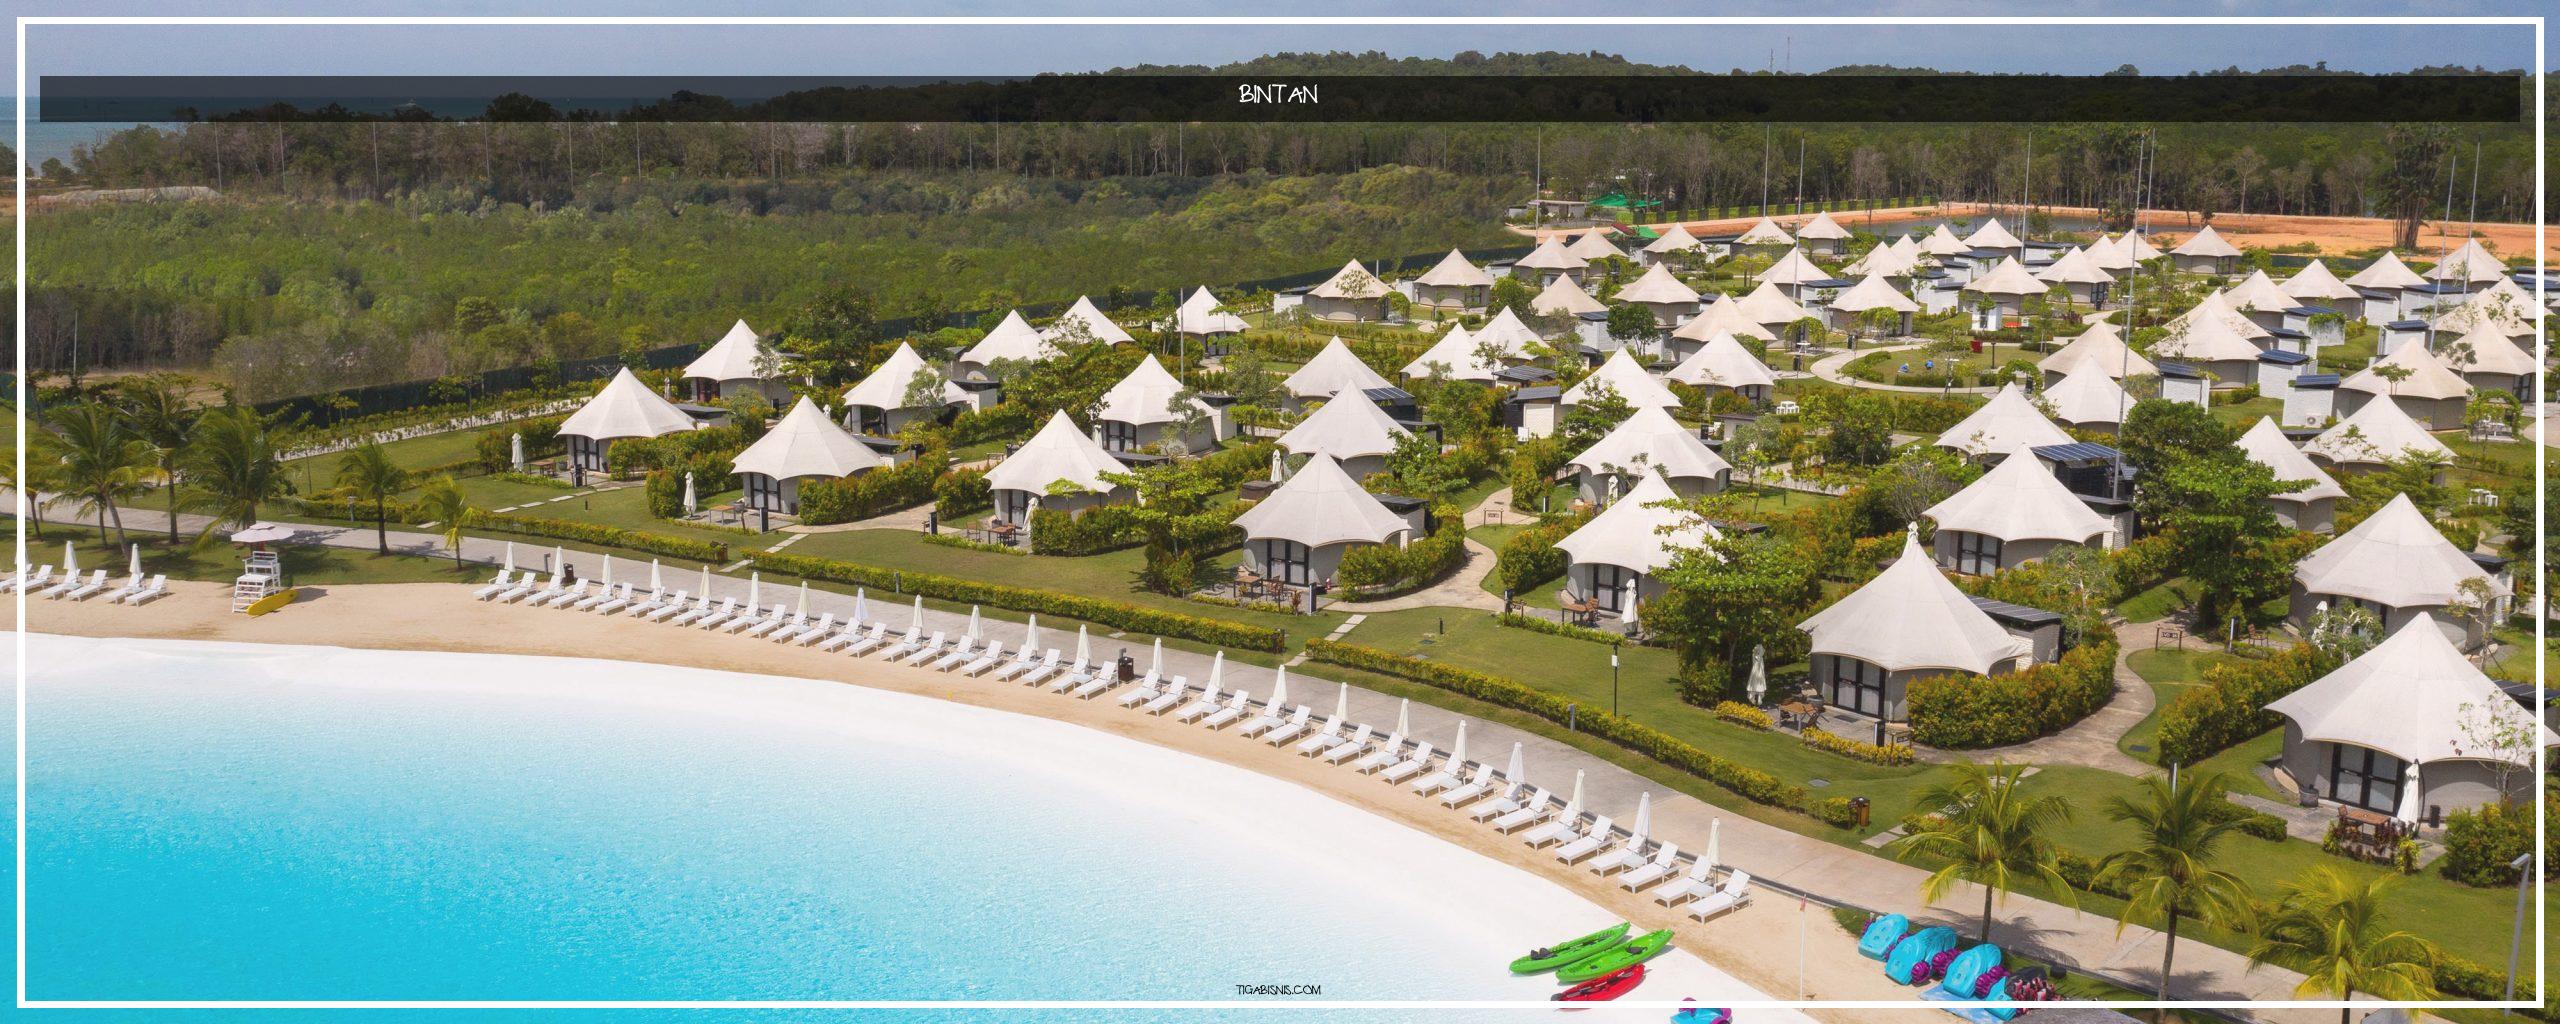 Kesempatan Kerja Untuk Bintan . Sumber : Https://www.marriott.com/hotels/travel/tnjtx-natra-bintan-a-tribute-portfolio-resort/